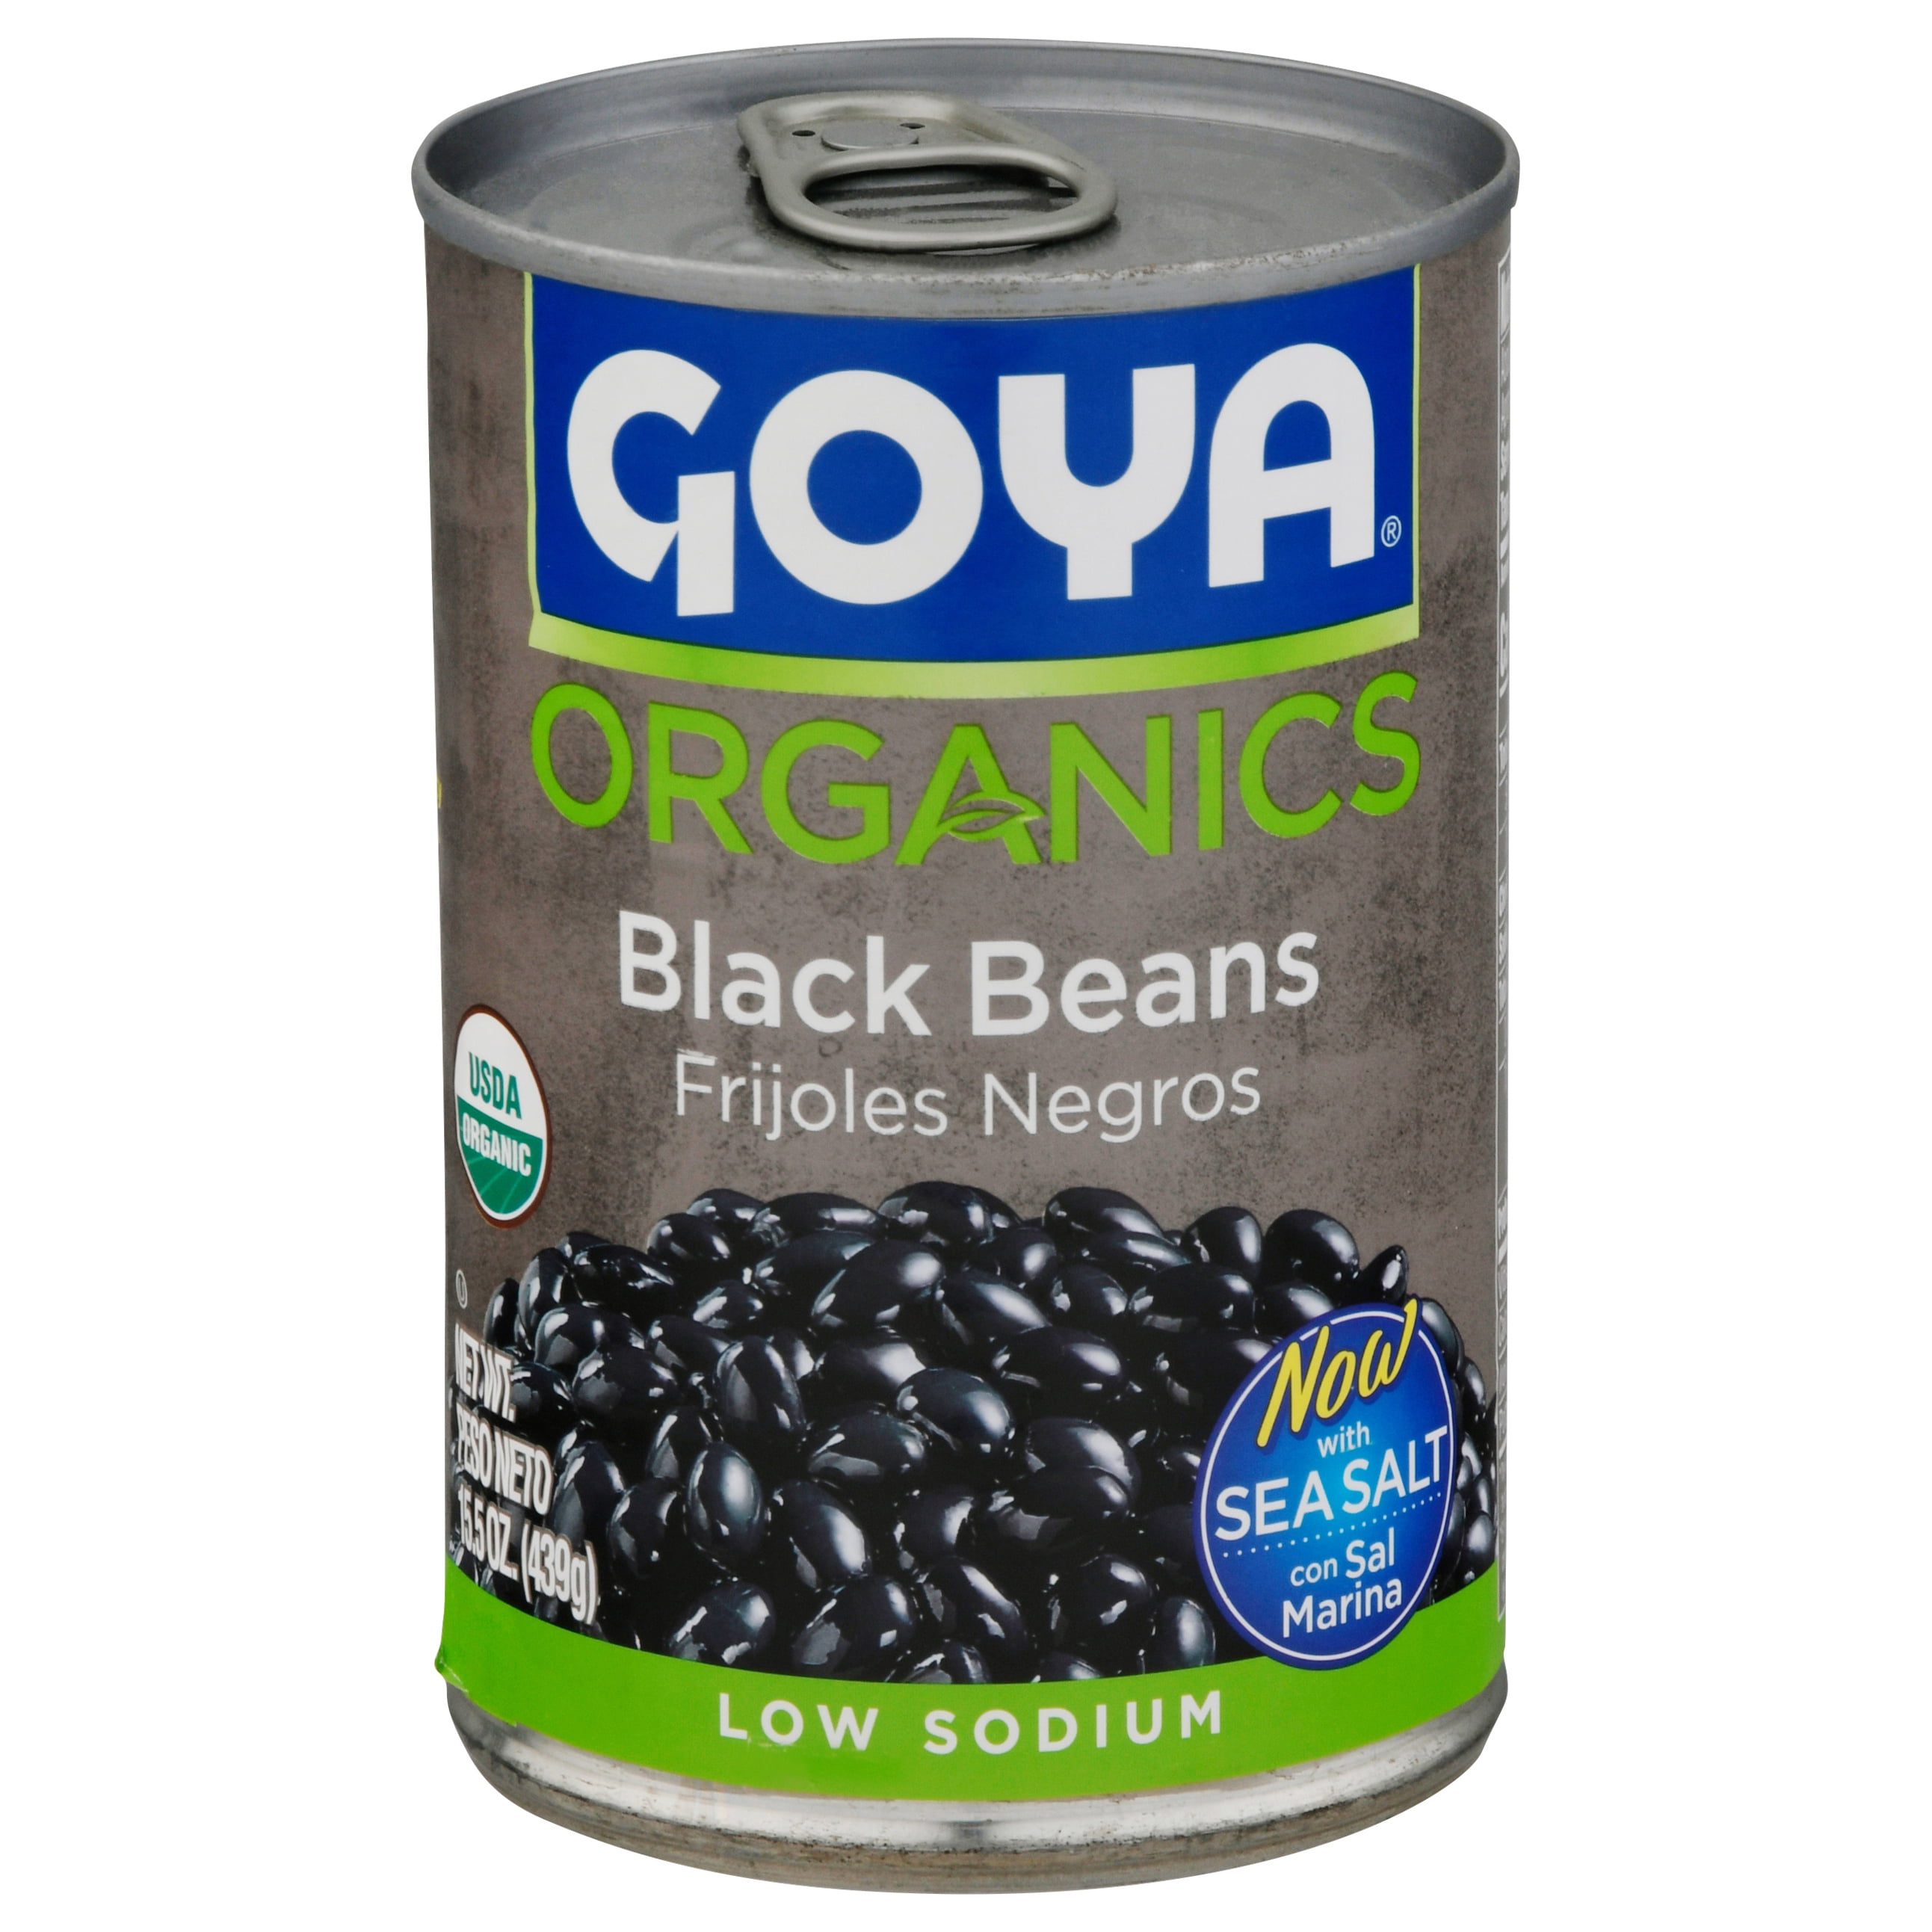 GOYA Organic Black Beans Low Sodium, 15.5 oz